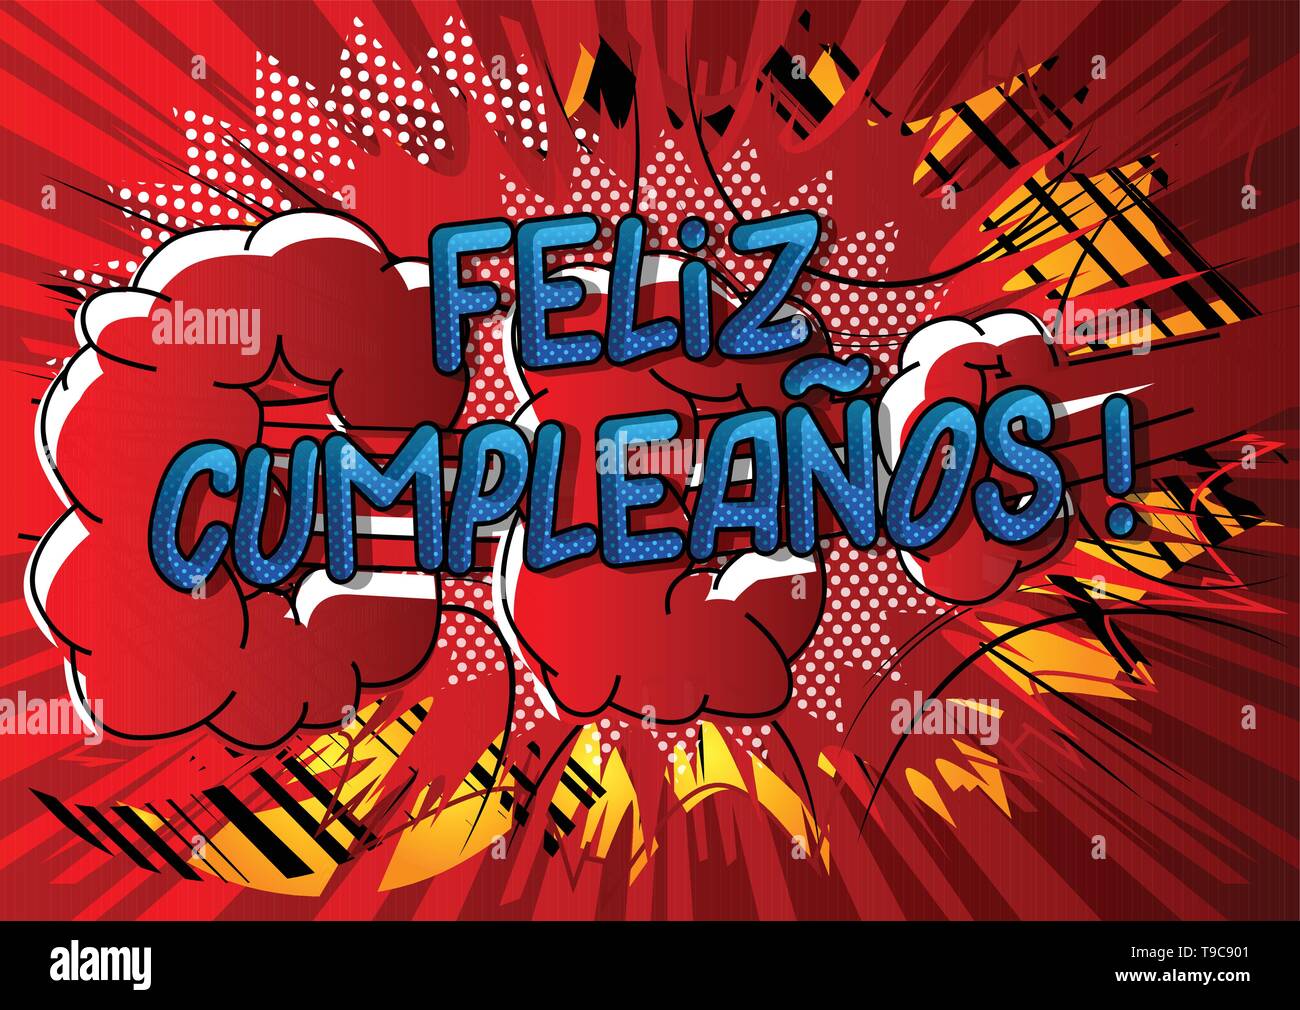 Feliz Cumpleanos Joyeux Anniversaire En Espagnol Vector Illustration Comic Book Style Phrase Image Vectorielle Stock Alamy